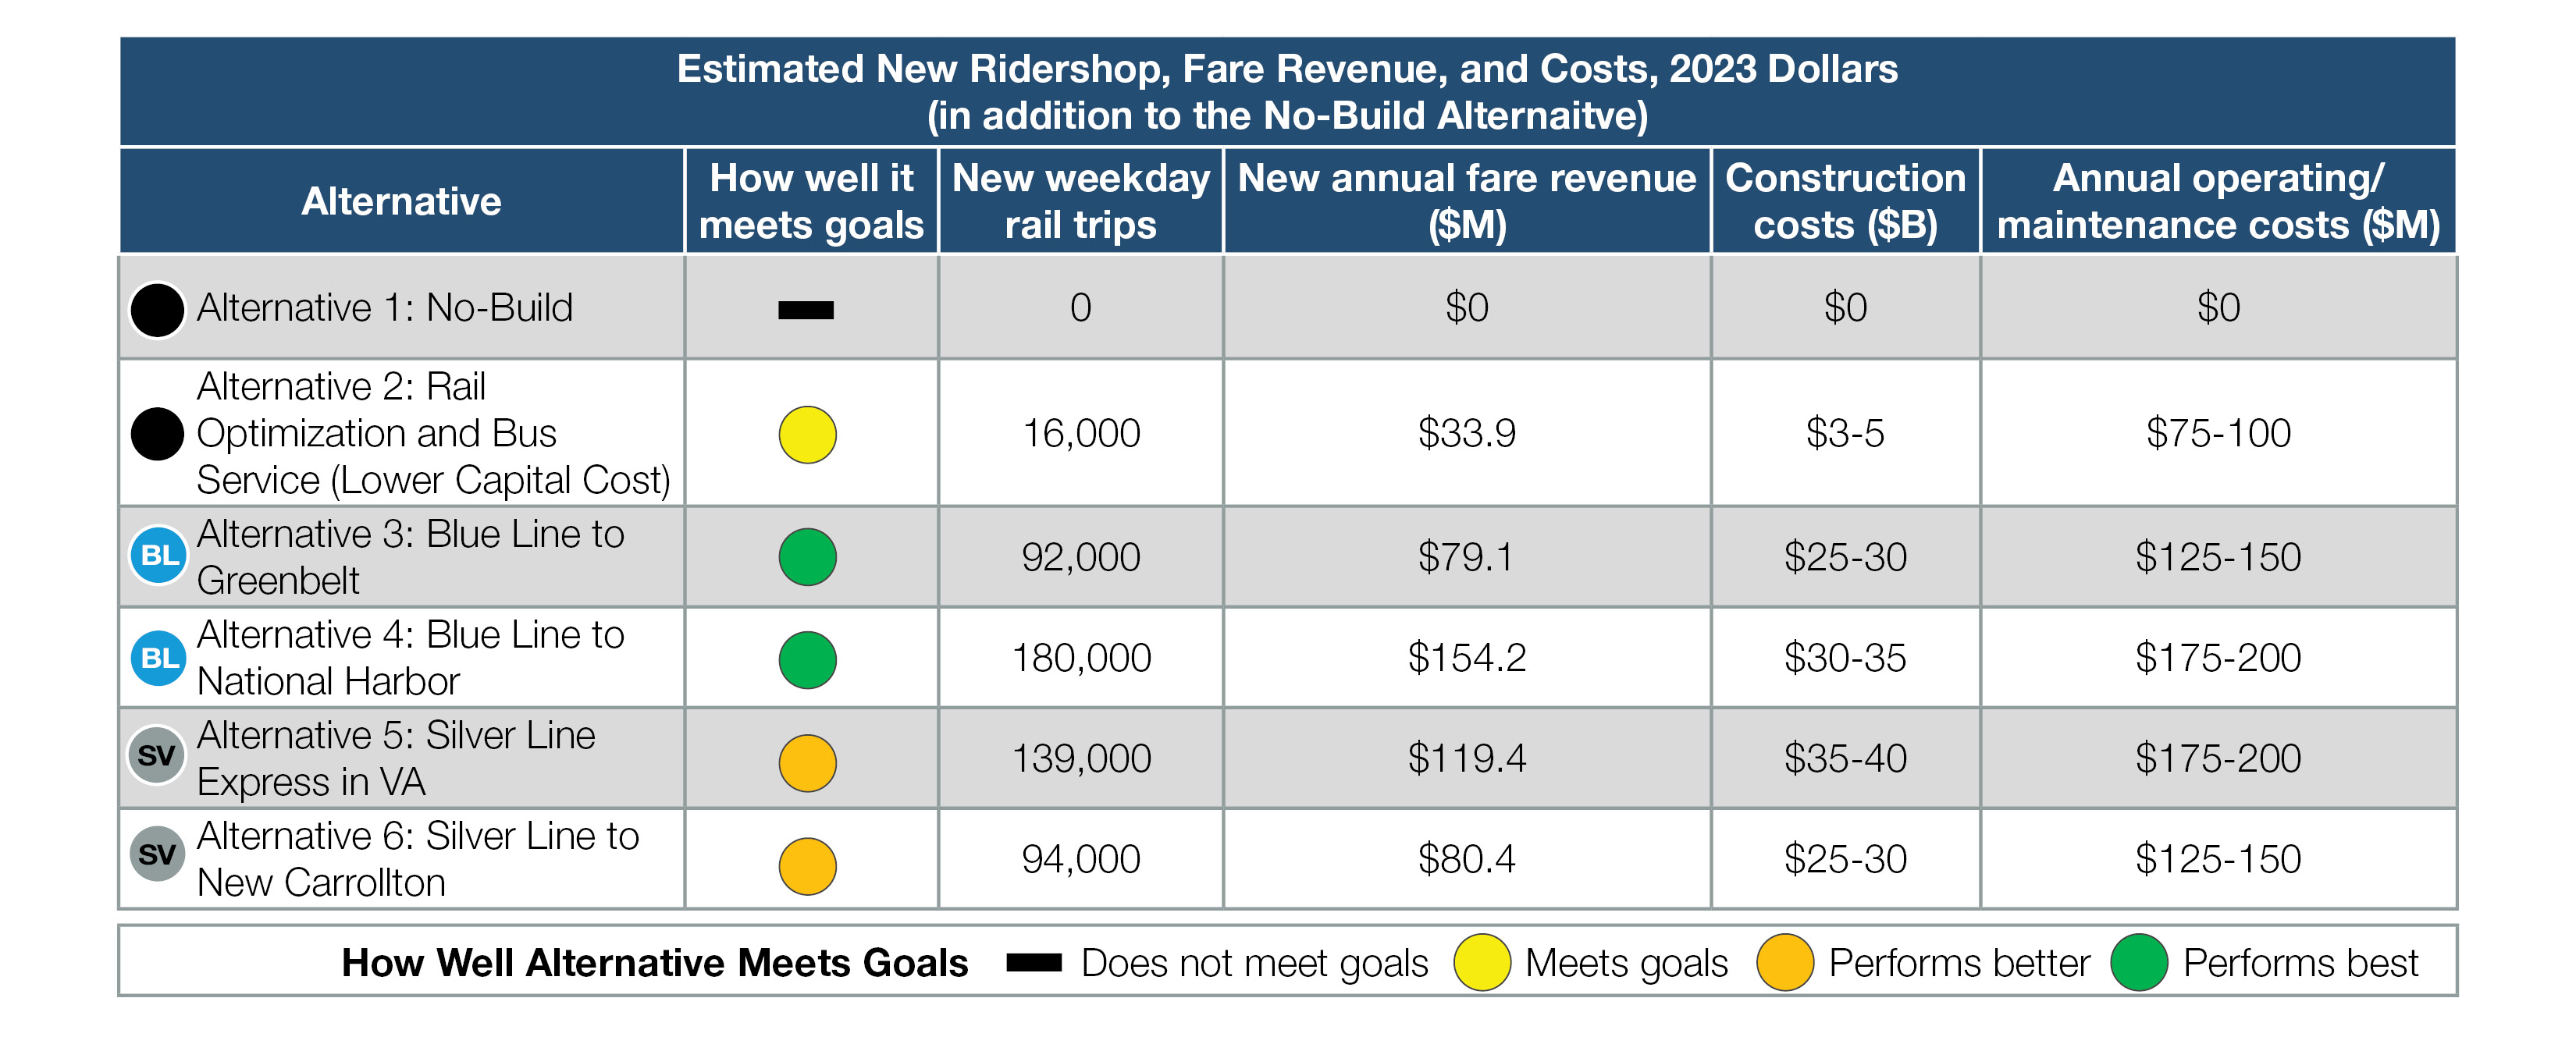 Table describing estimated new ridership, fare revenue, and costs for each alternative, in 2020 dollars.